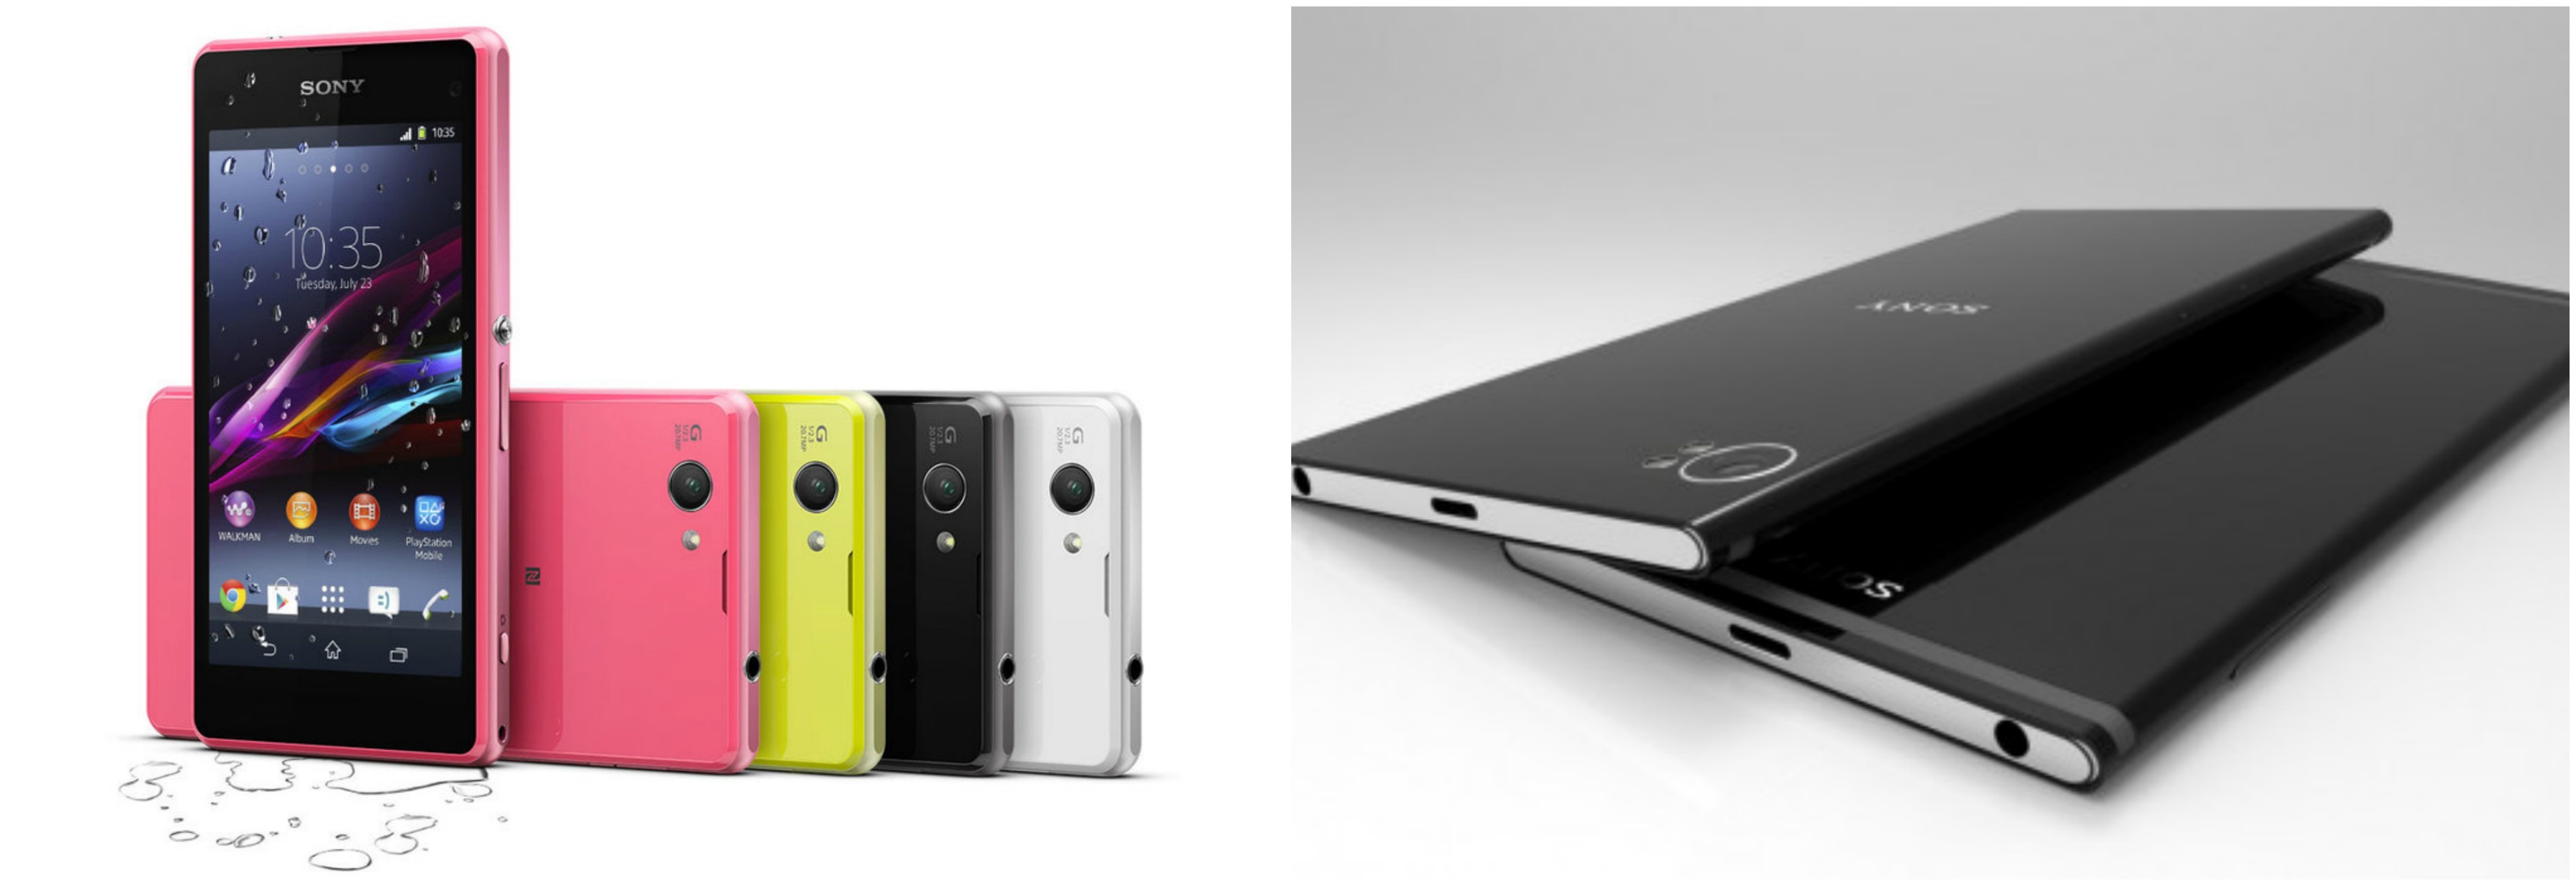 Sony Xperia Z6 Concepts